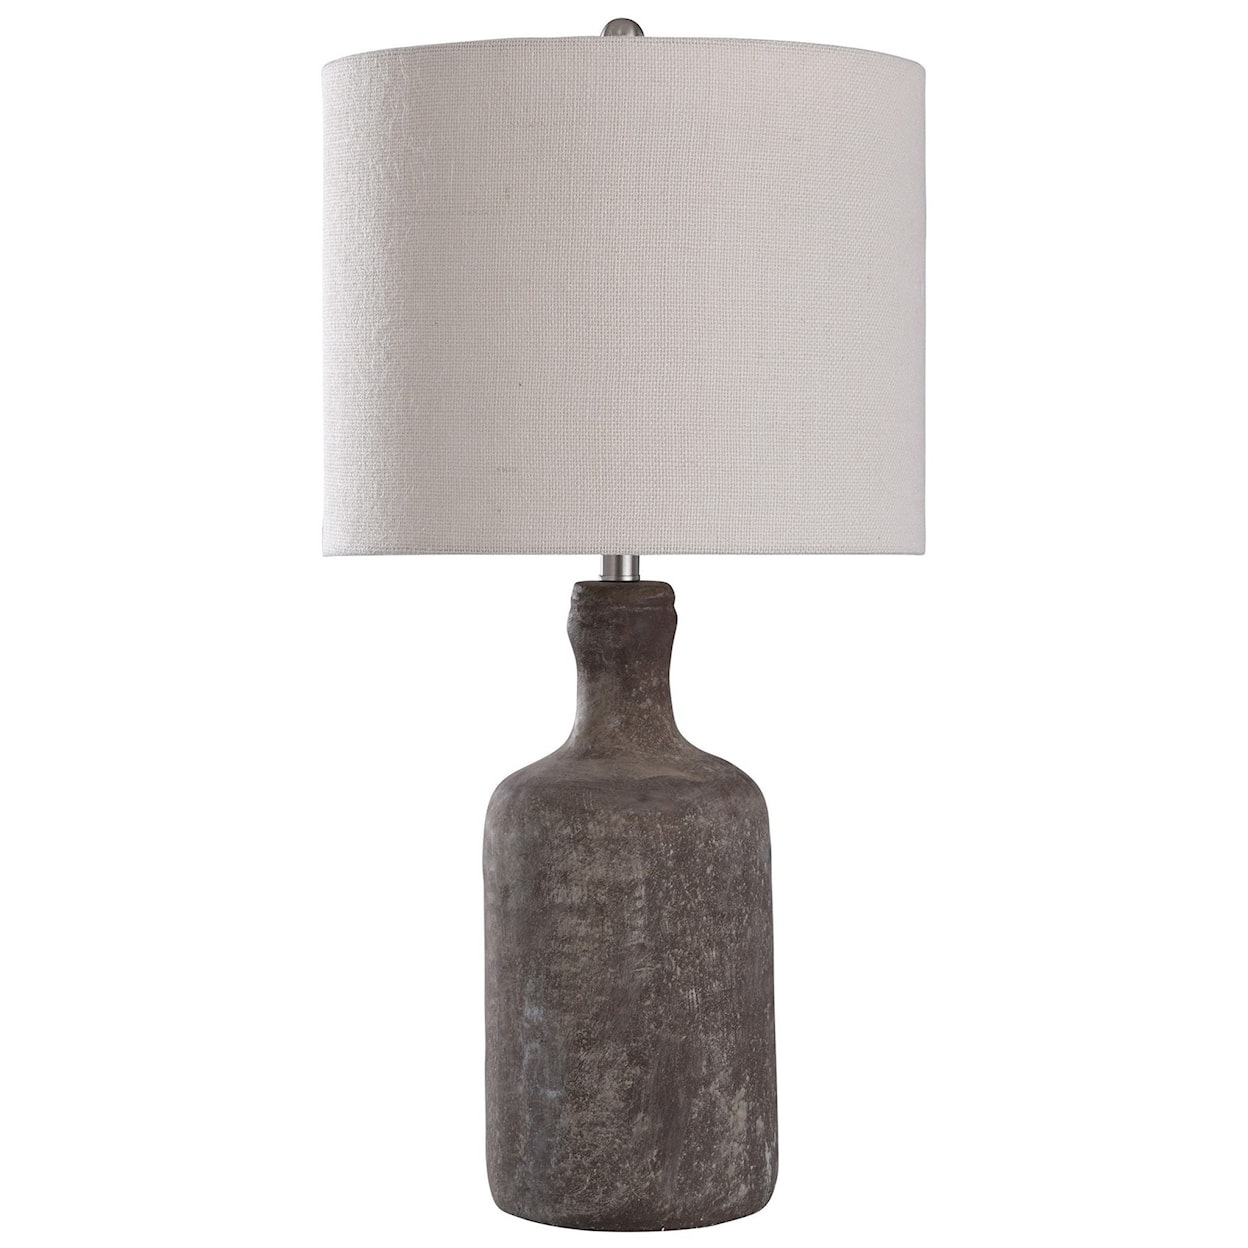 StyleCraft Lamps Olney Grey Lamp